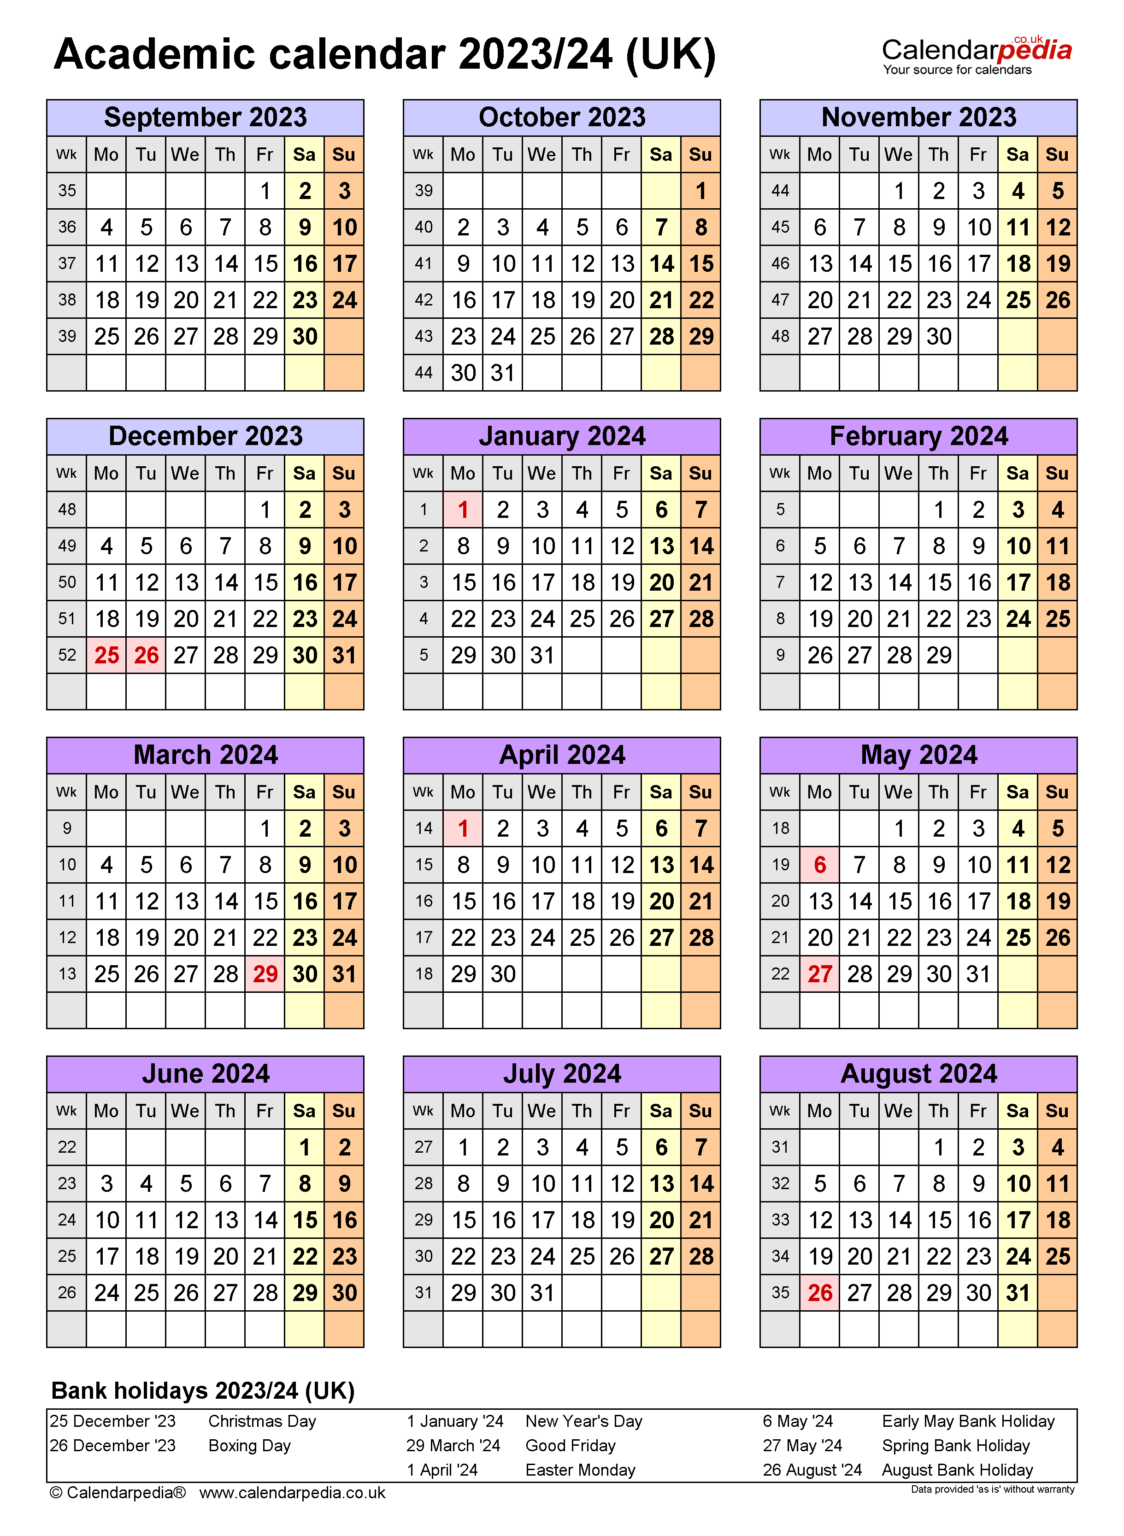 2023 Academic Calendar Oakland University